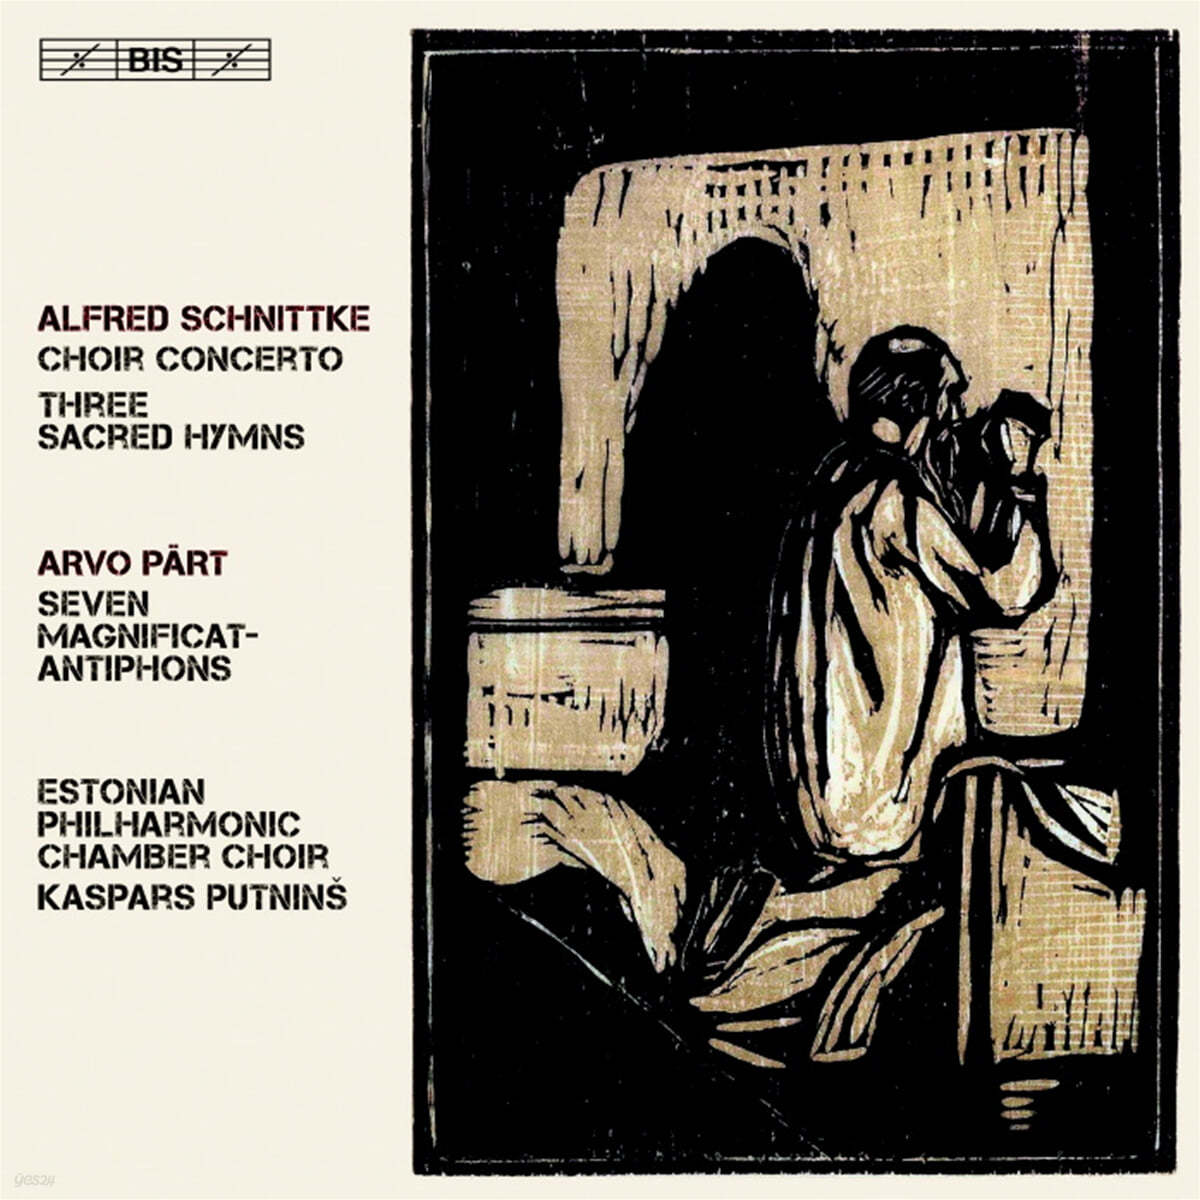 Kaspars Putnins 슈니트케 / 패르트: 무반주 합창을 위한 콘체르토 외 (Alfred Schnittke / Arvo Part: Choir Concerto) 